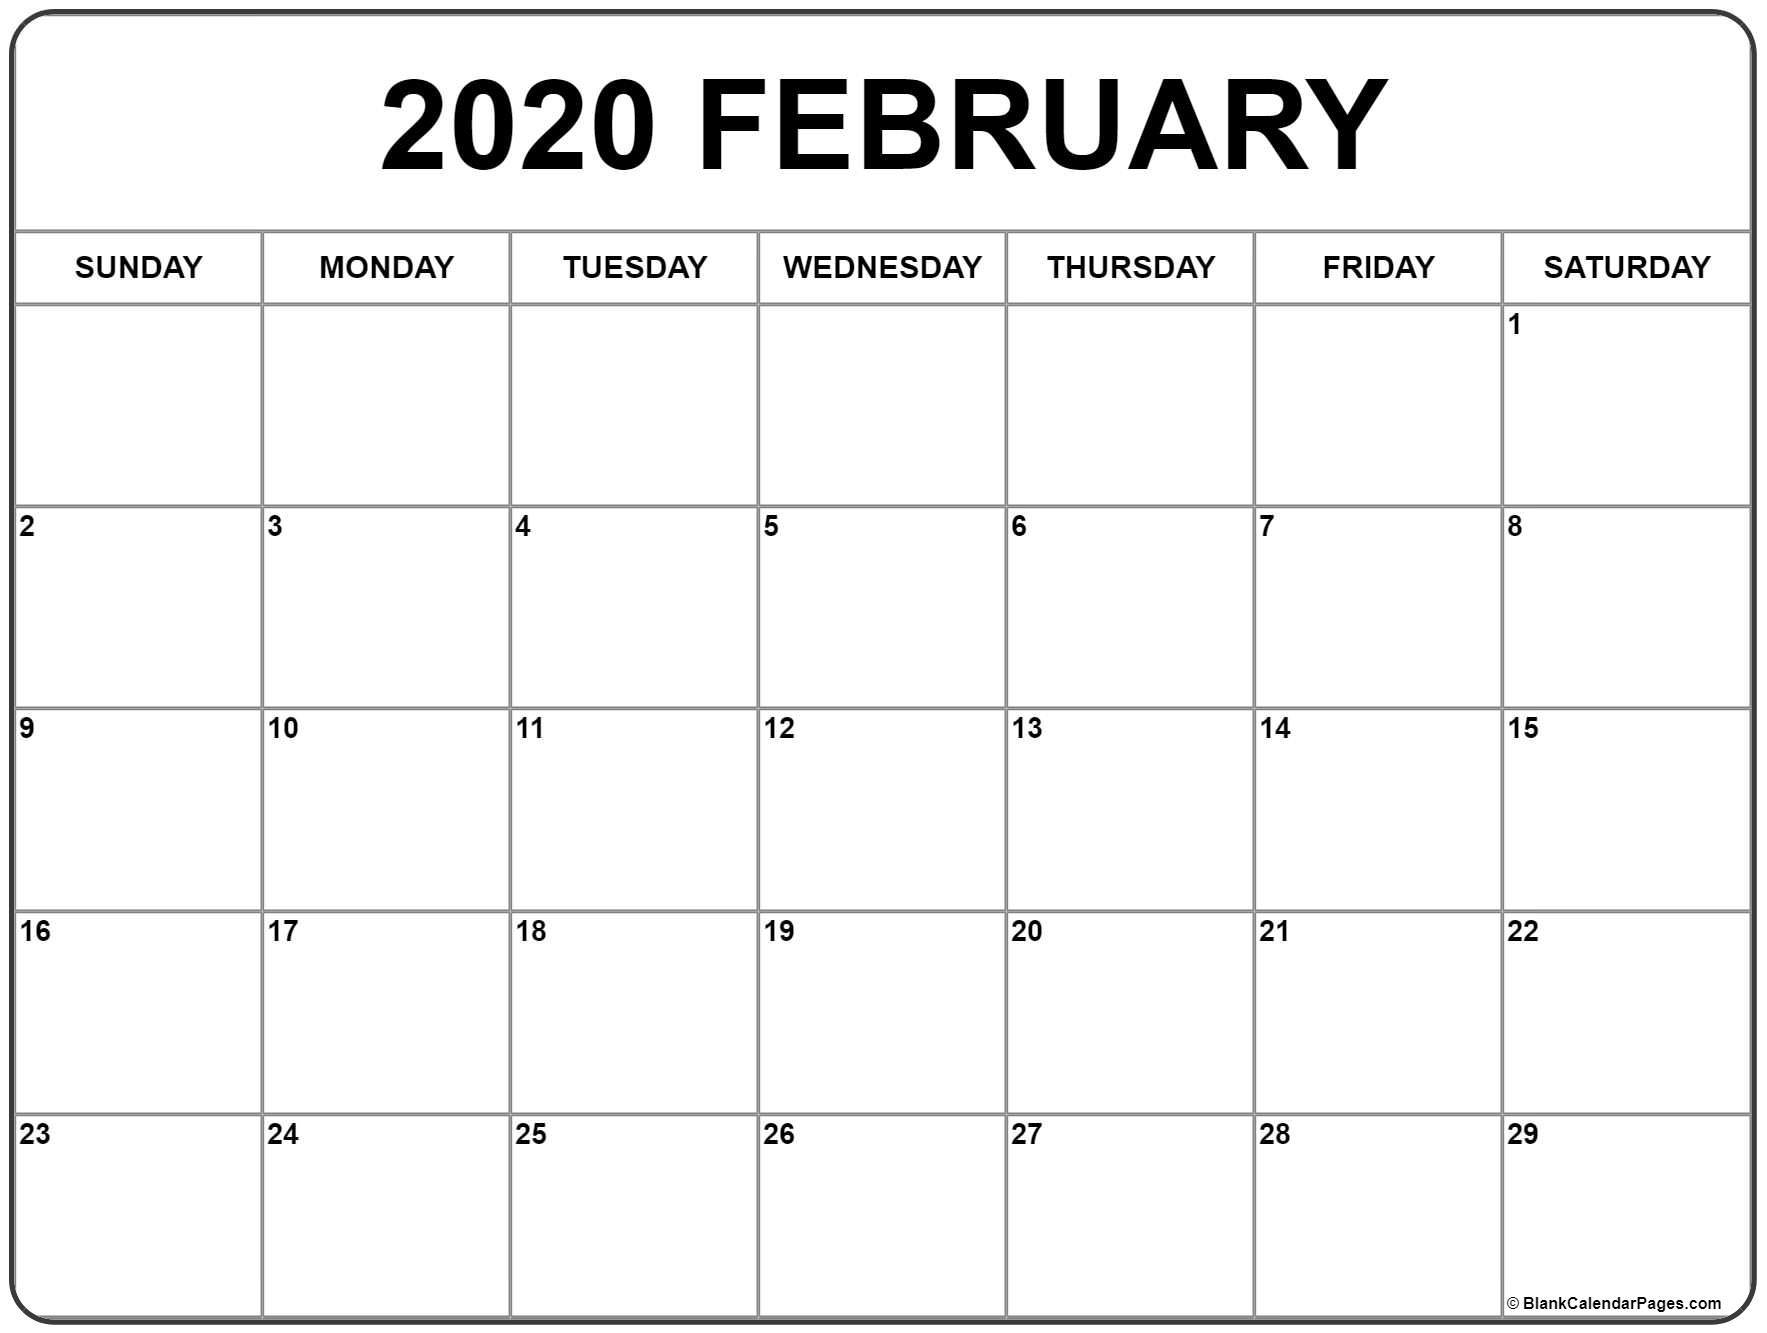 February 2020 Calendar B18 Feb 2020 Calendar